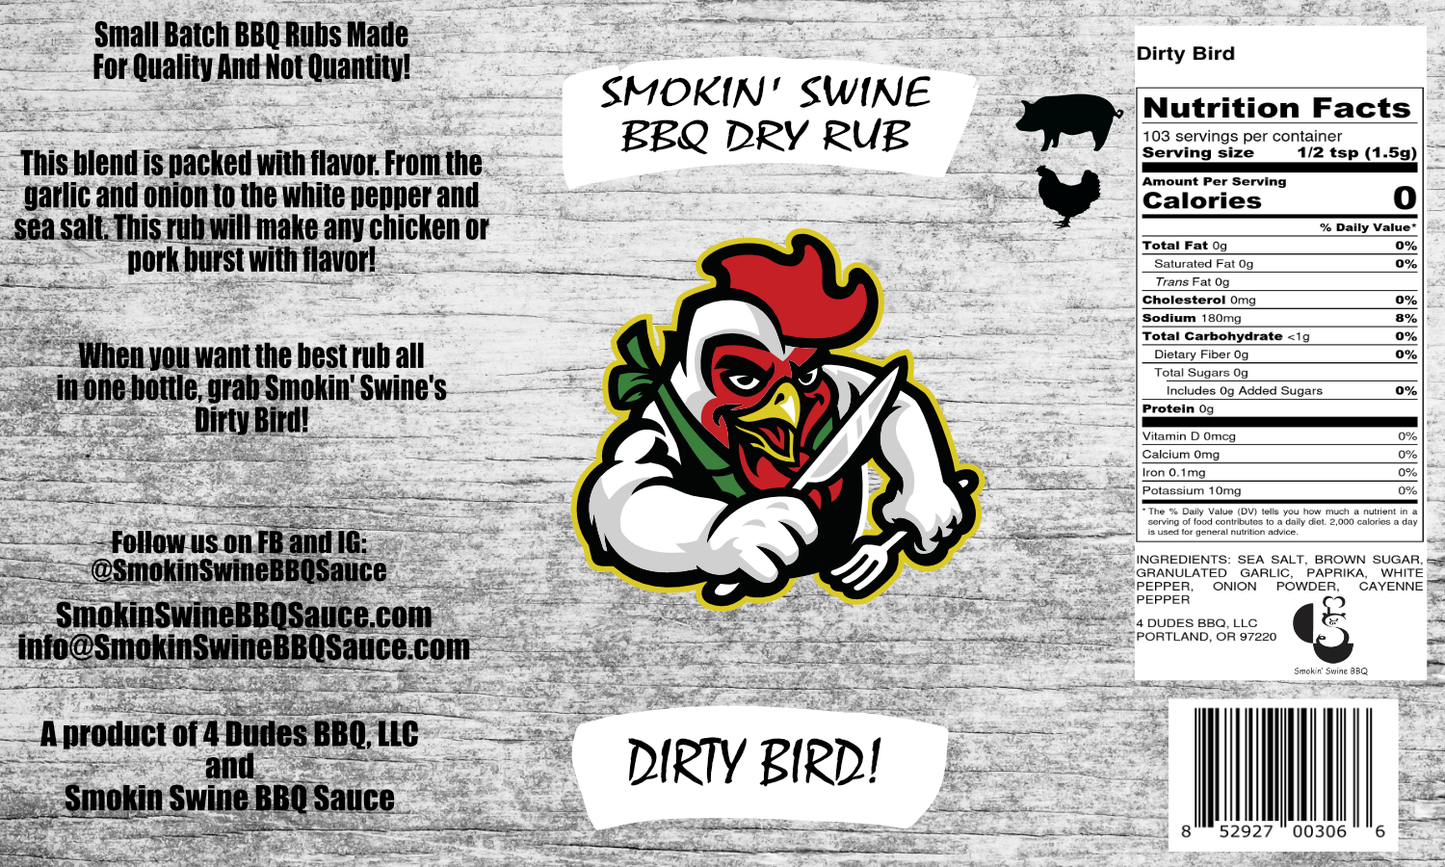 Dirty Bird! Dry Rub